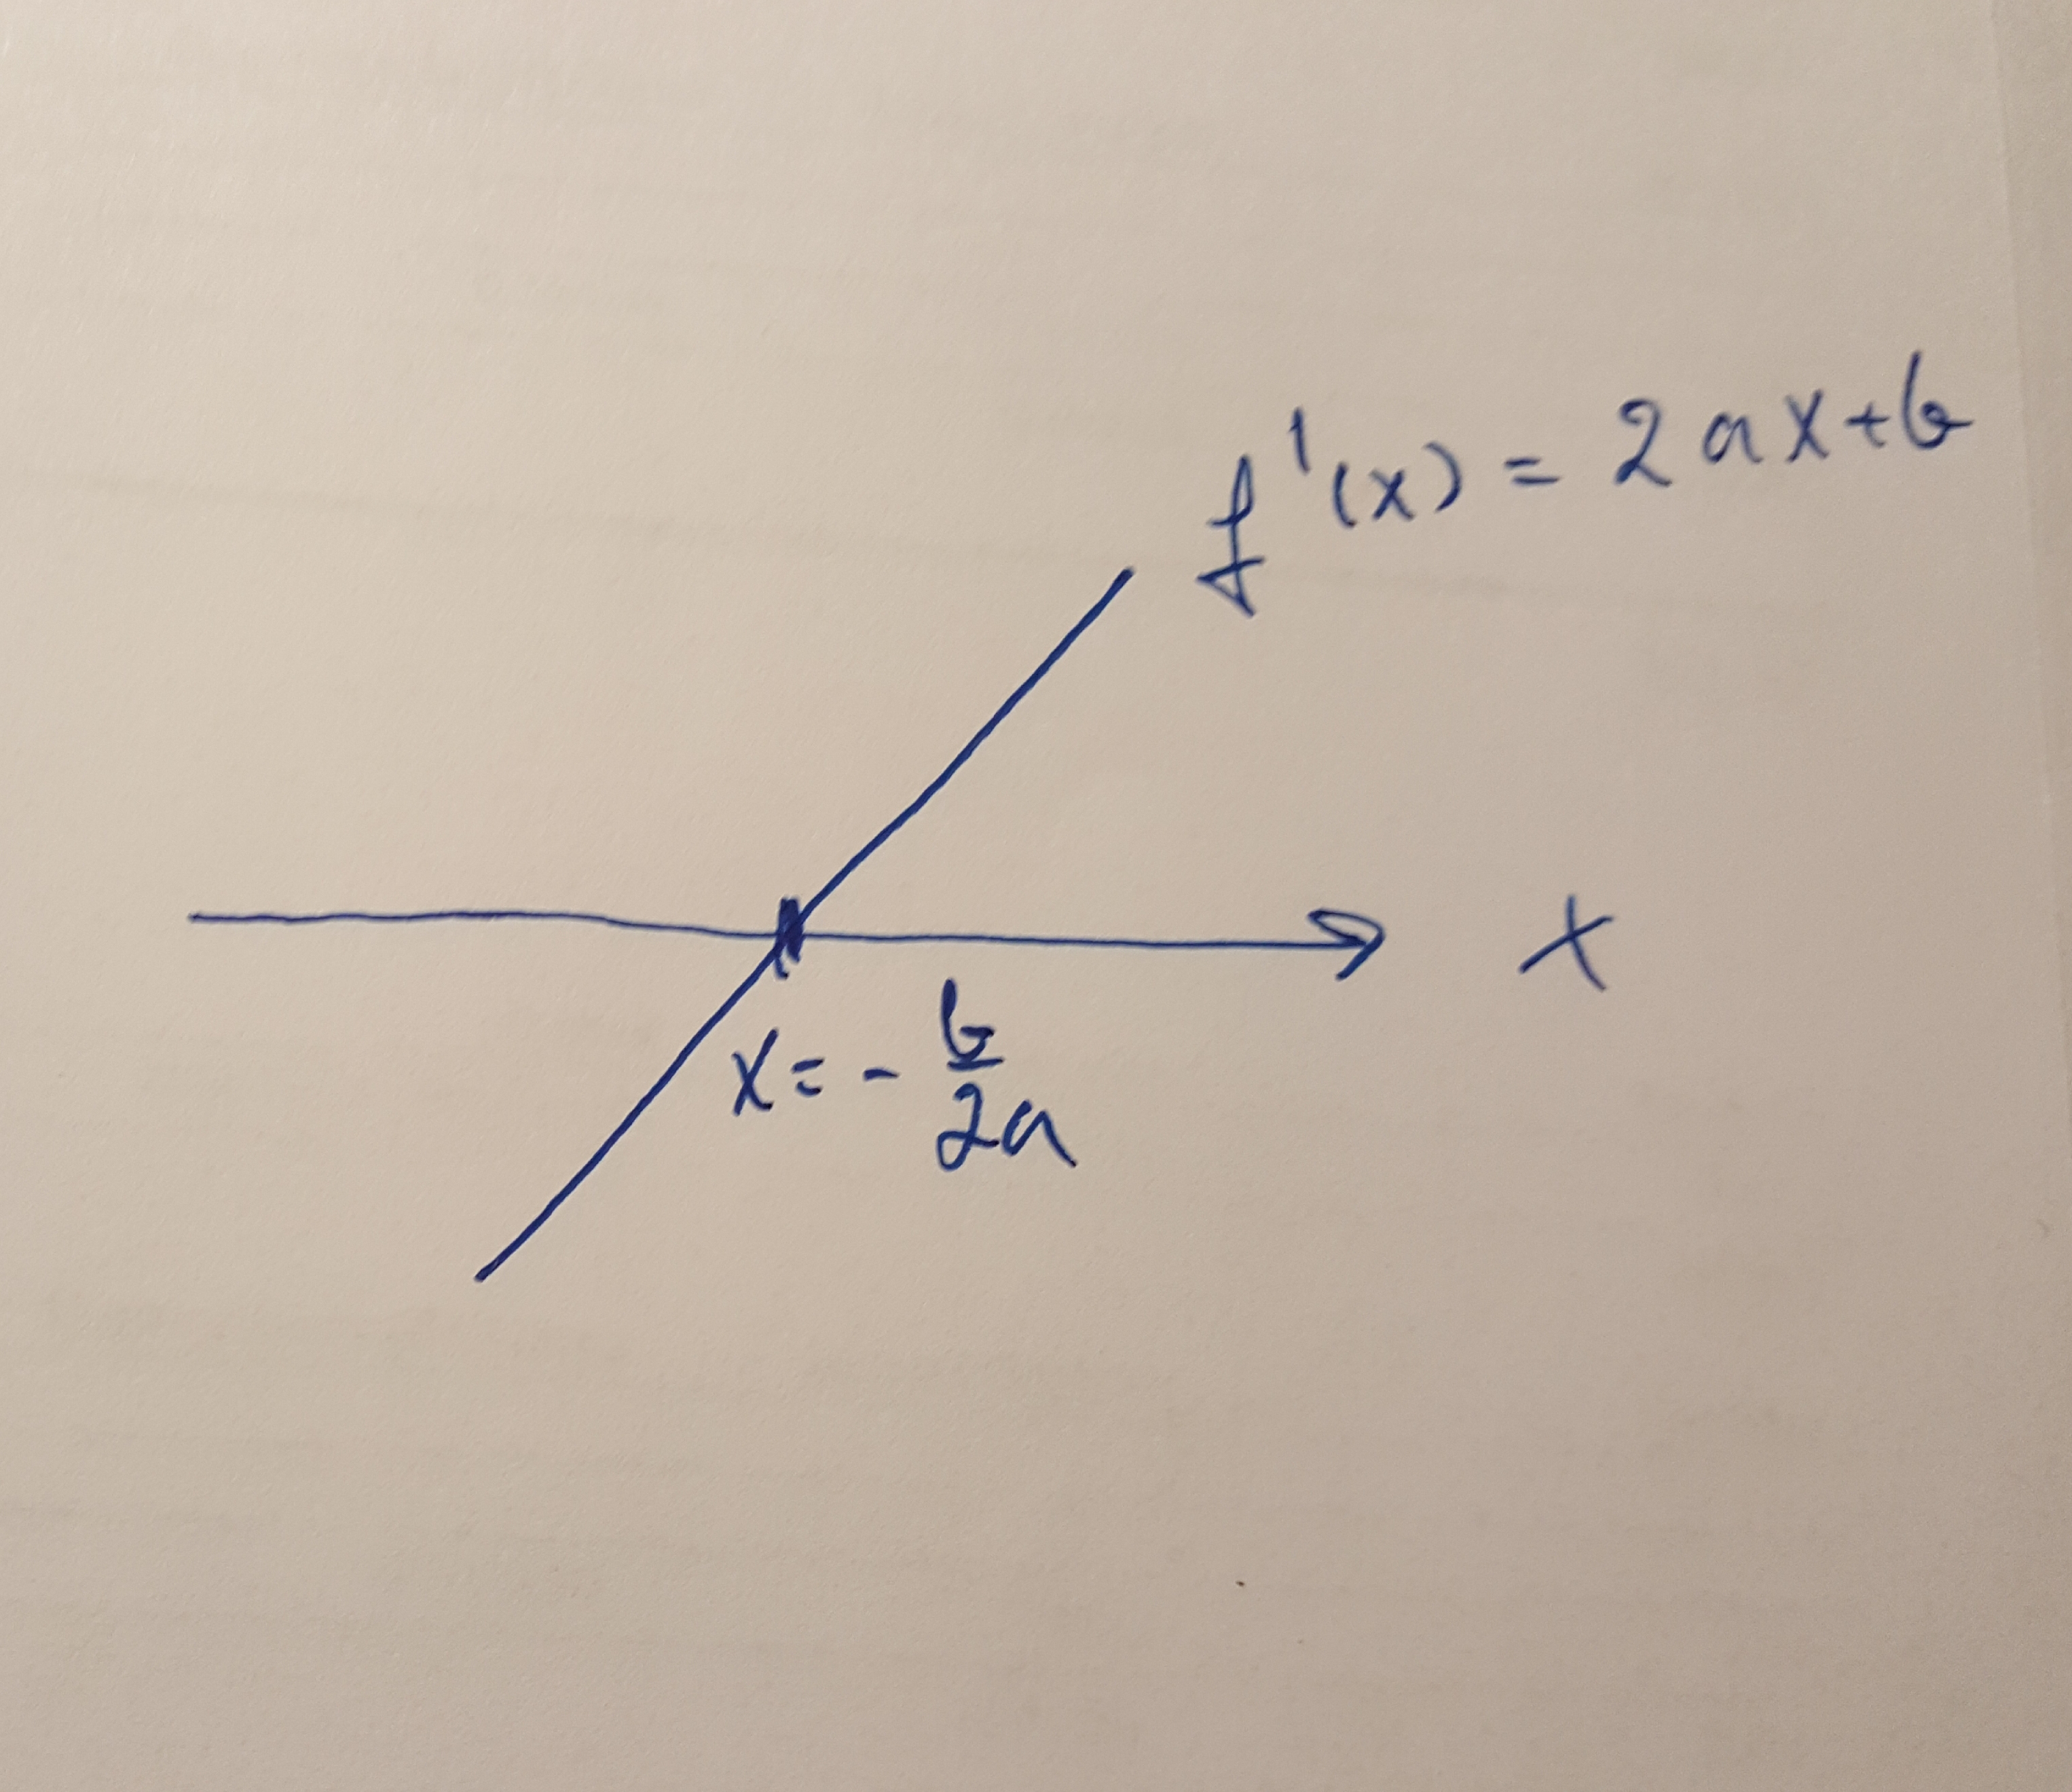 derivatans graf